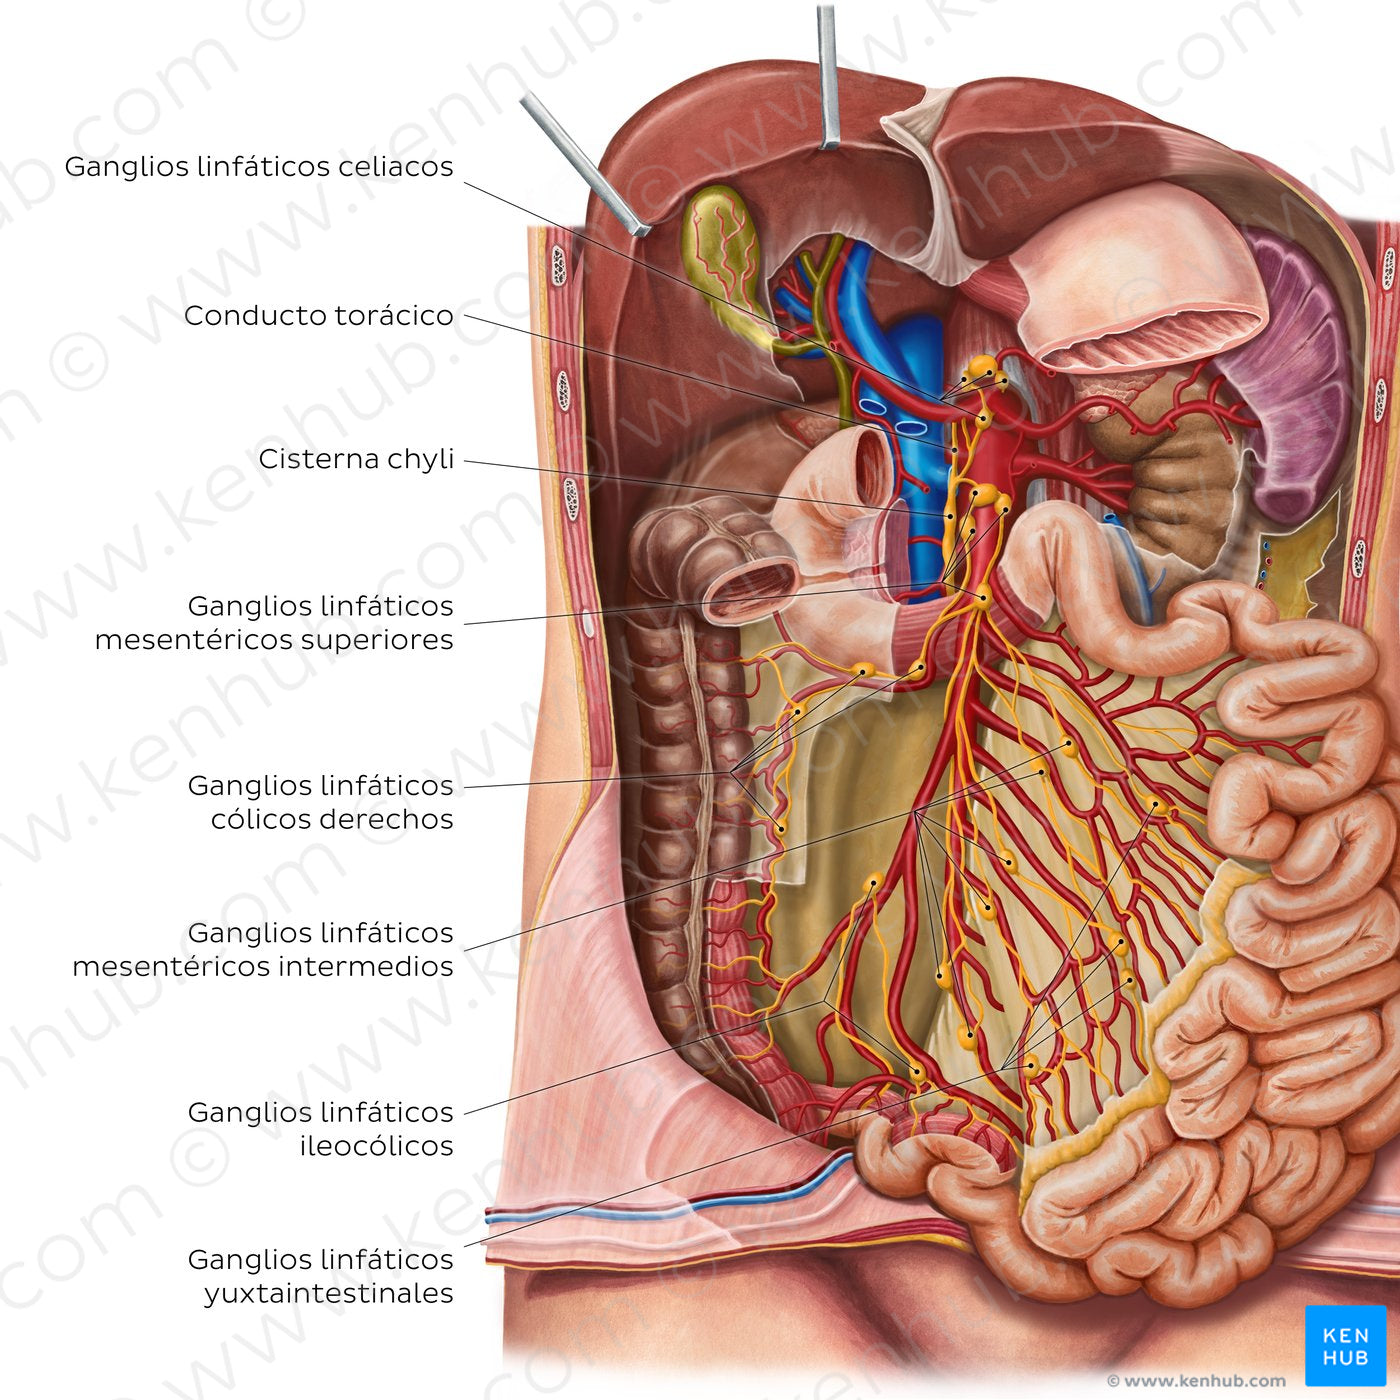 Lymph nodes of the small intestine (Spanish)